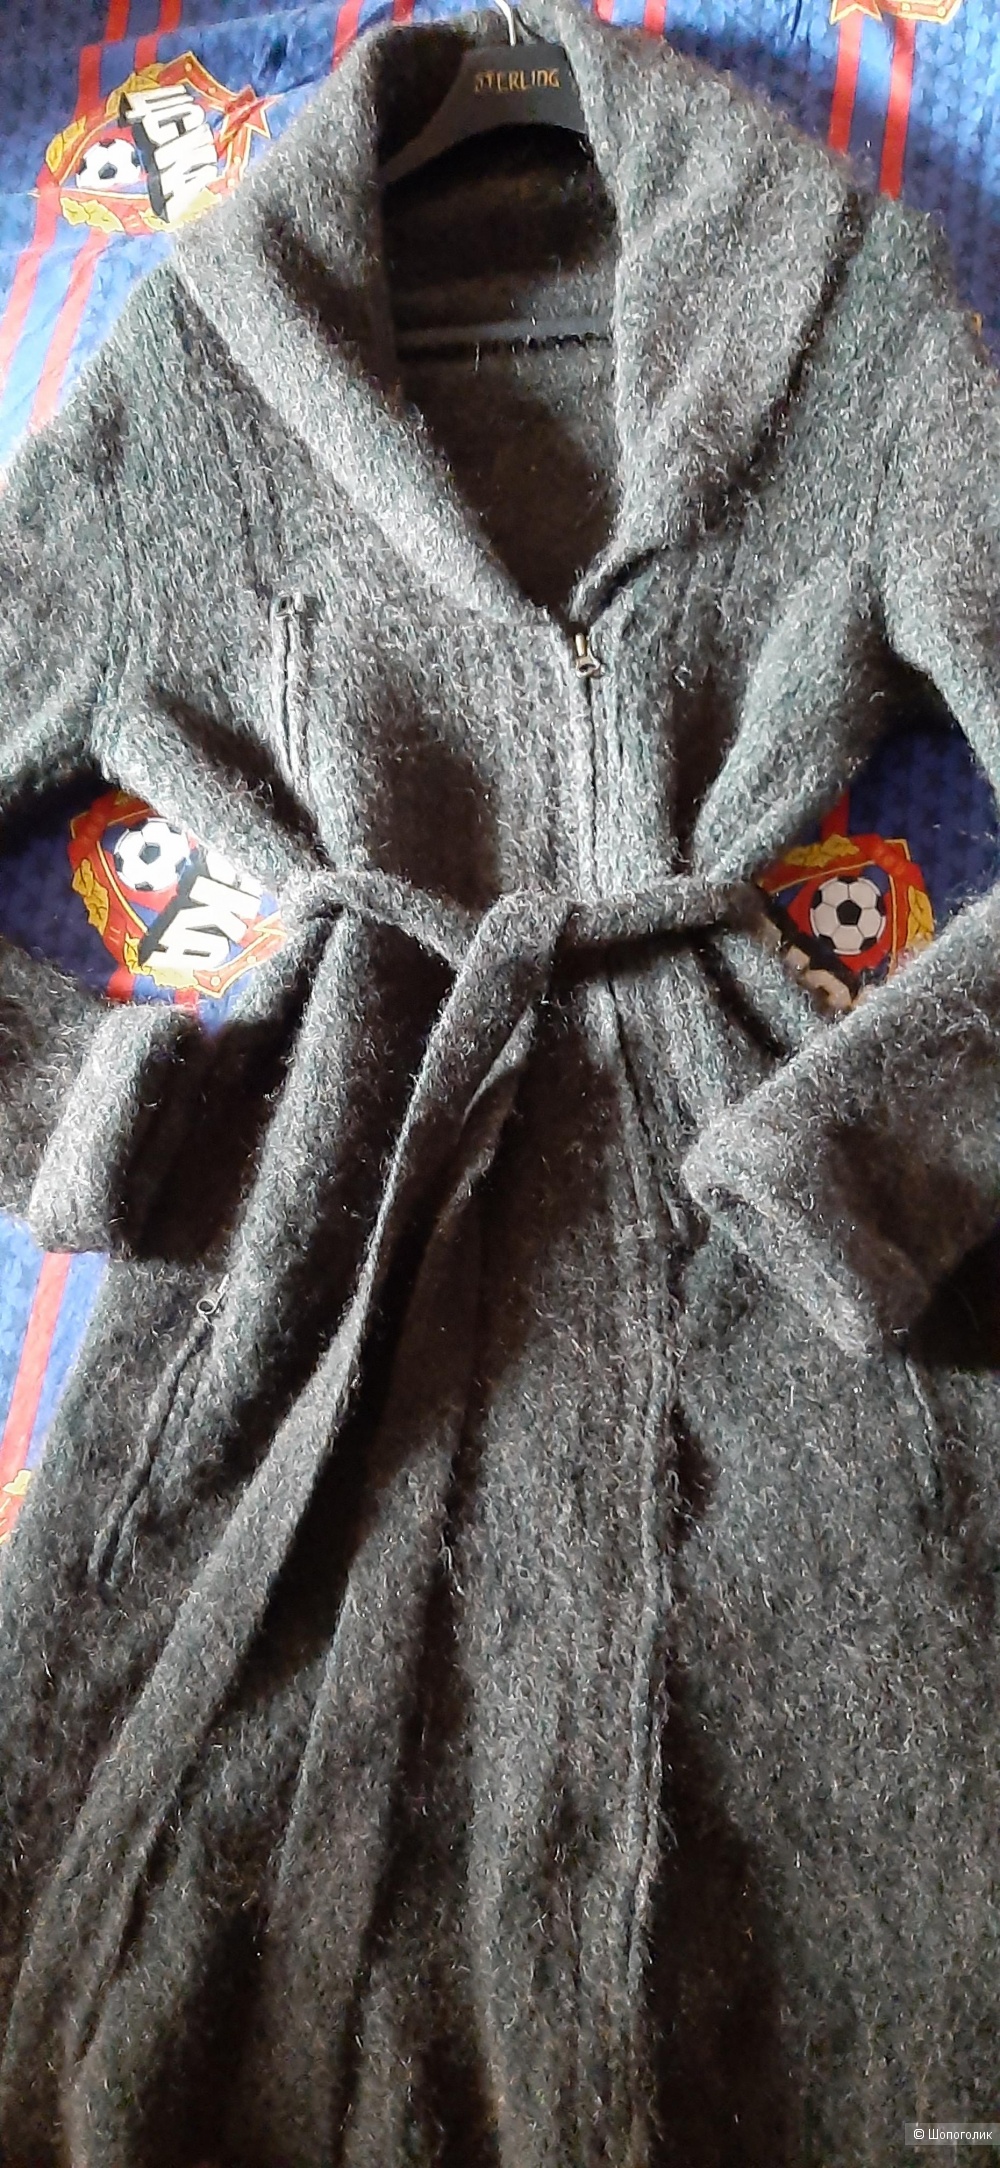 Мохеровое пальто-​ кардиган​ Chine belgian design, 3 на 44-46